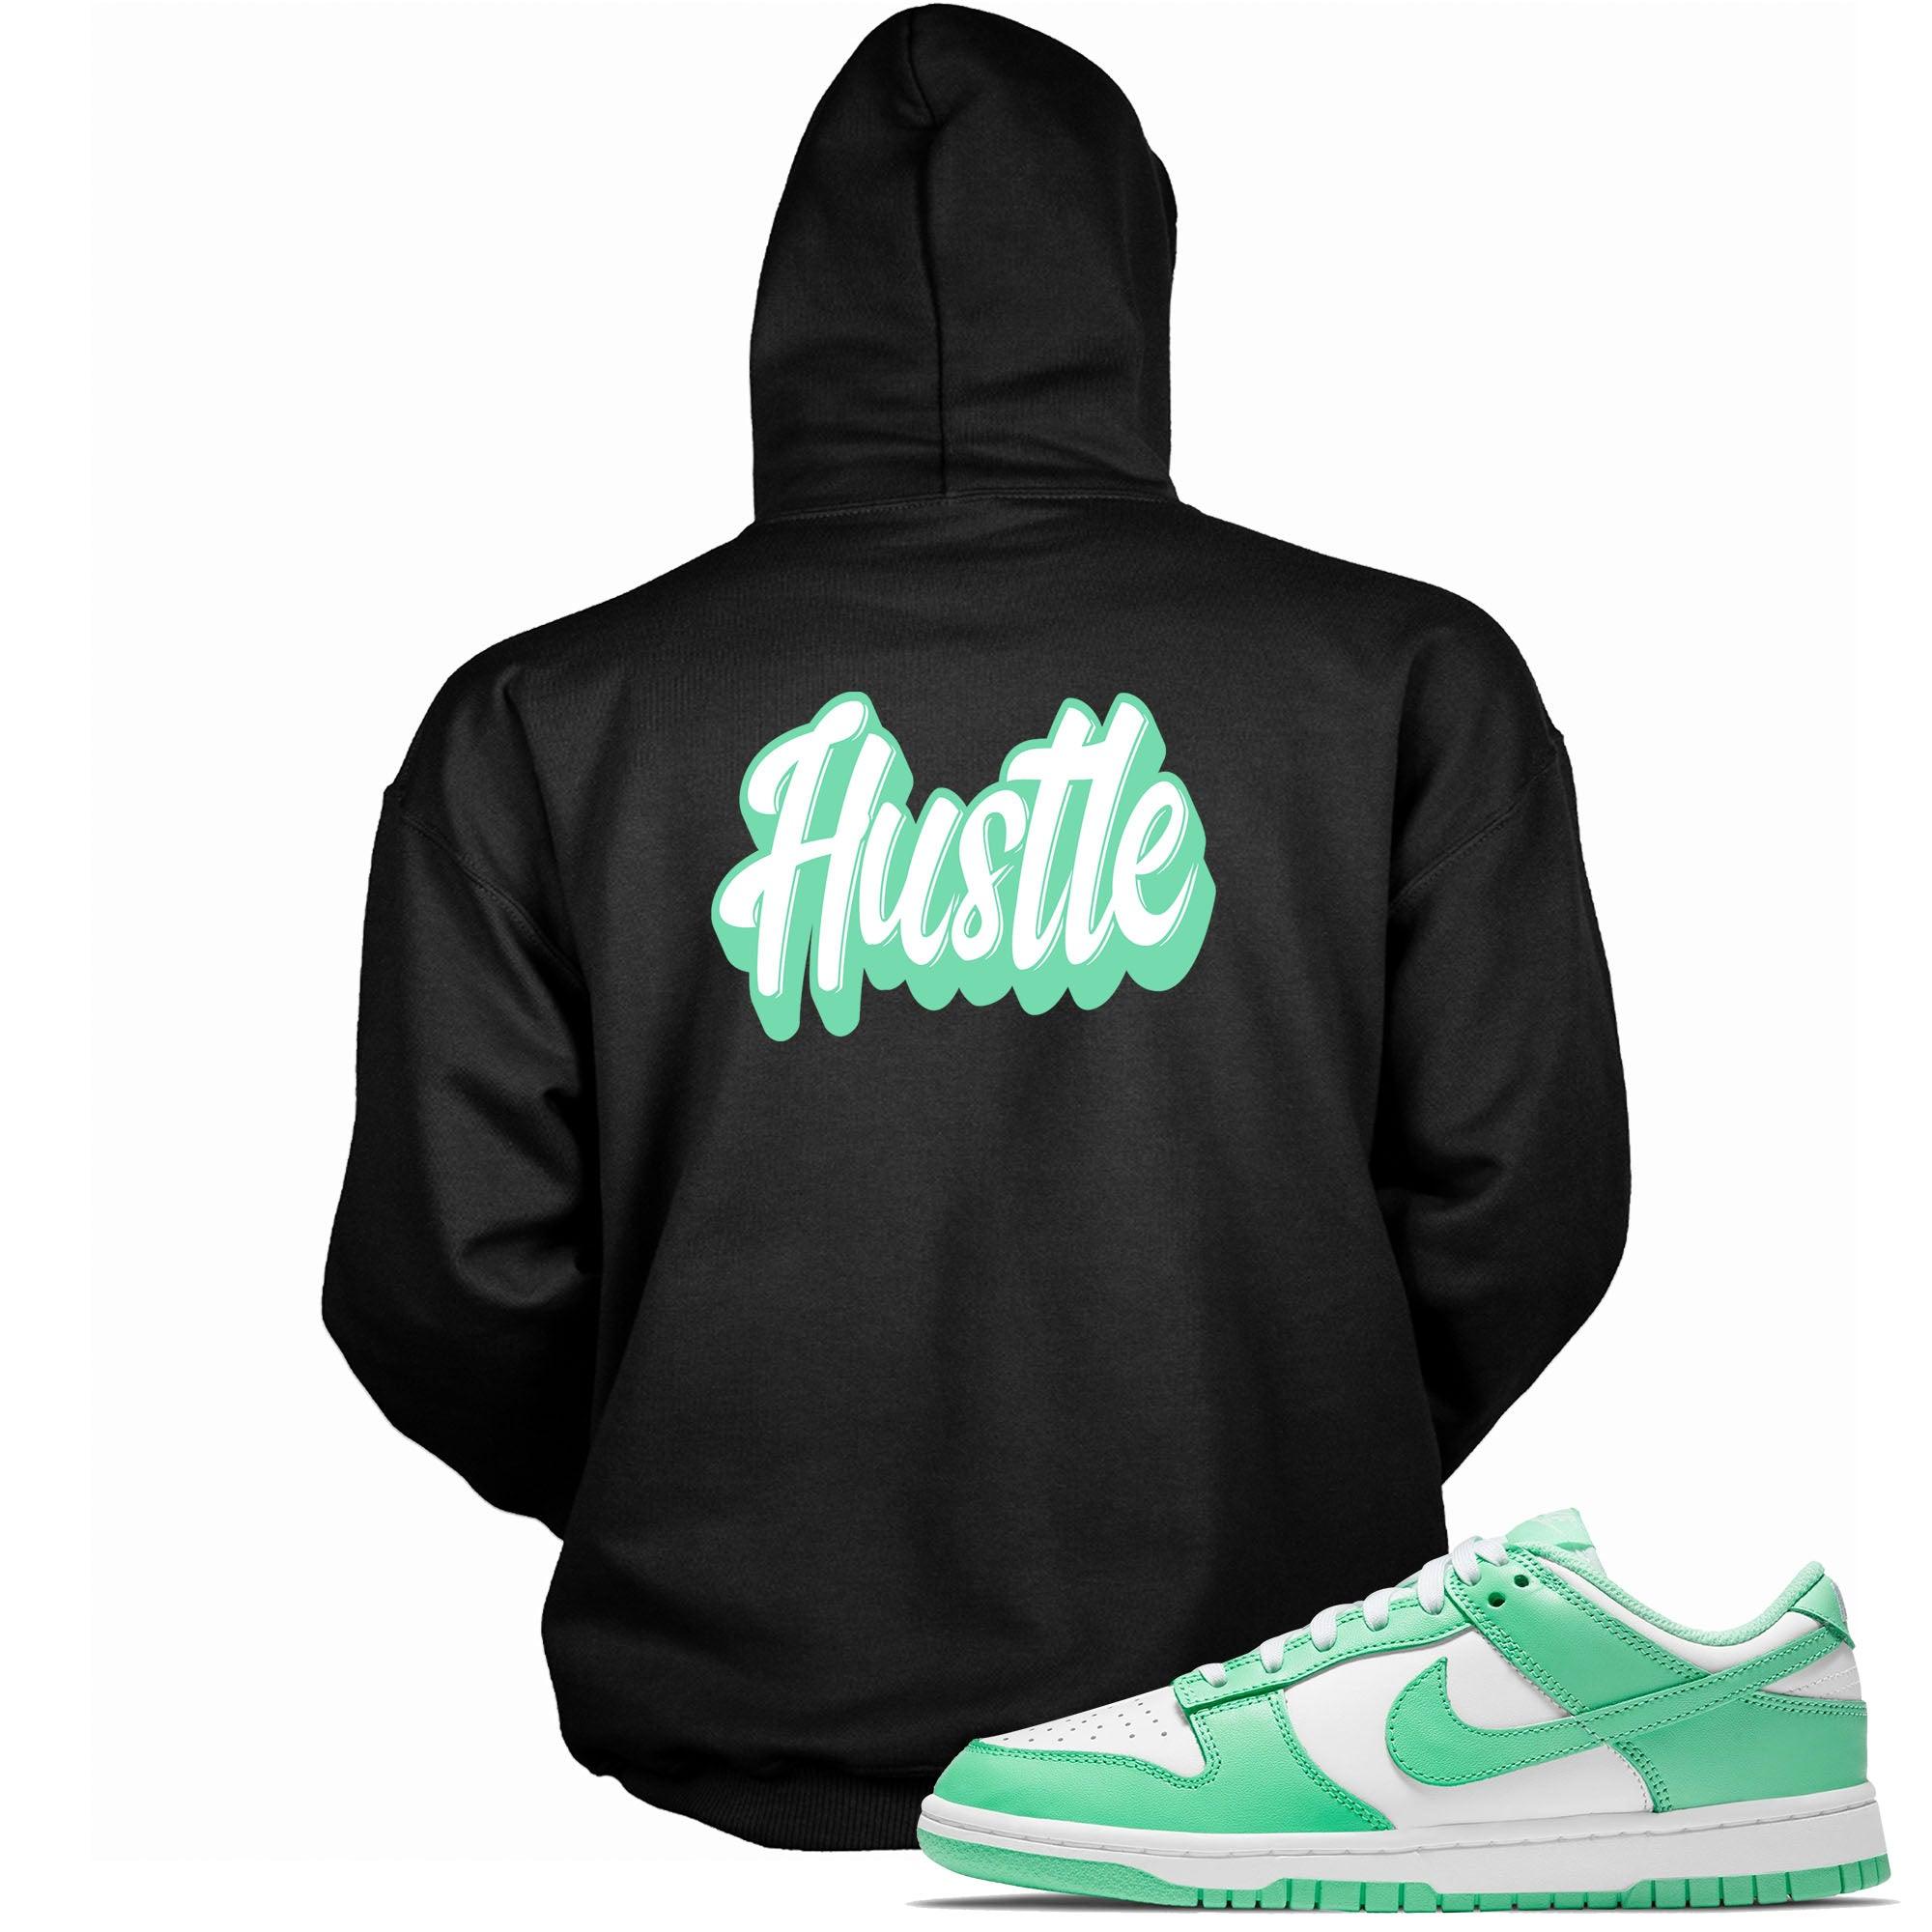 Black Hustle Hoodie Nike Dunks Low Green Glow photo